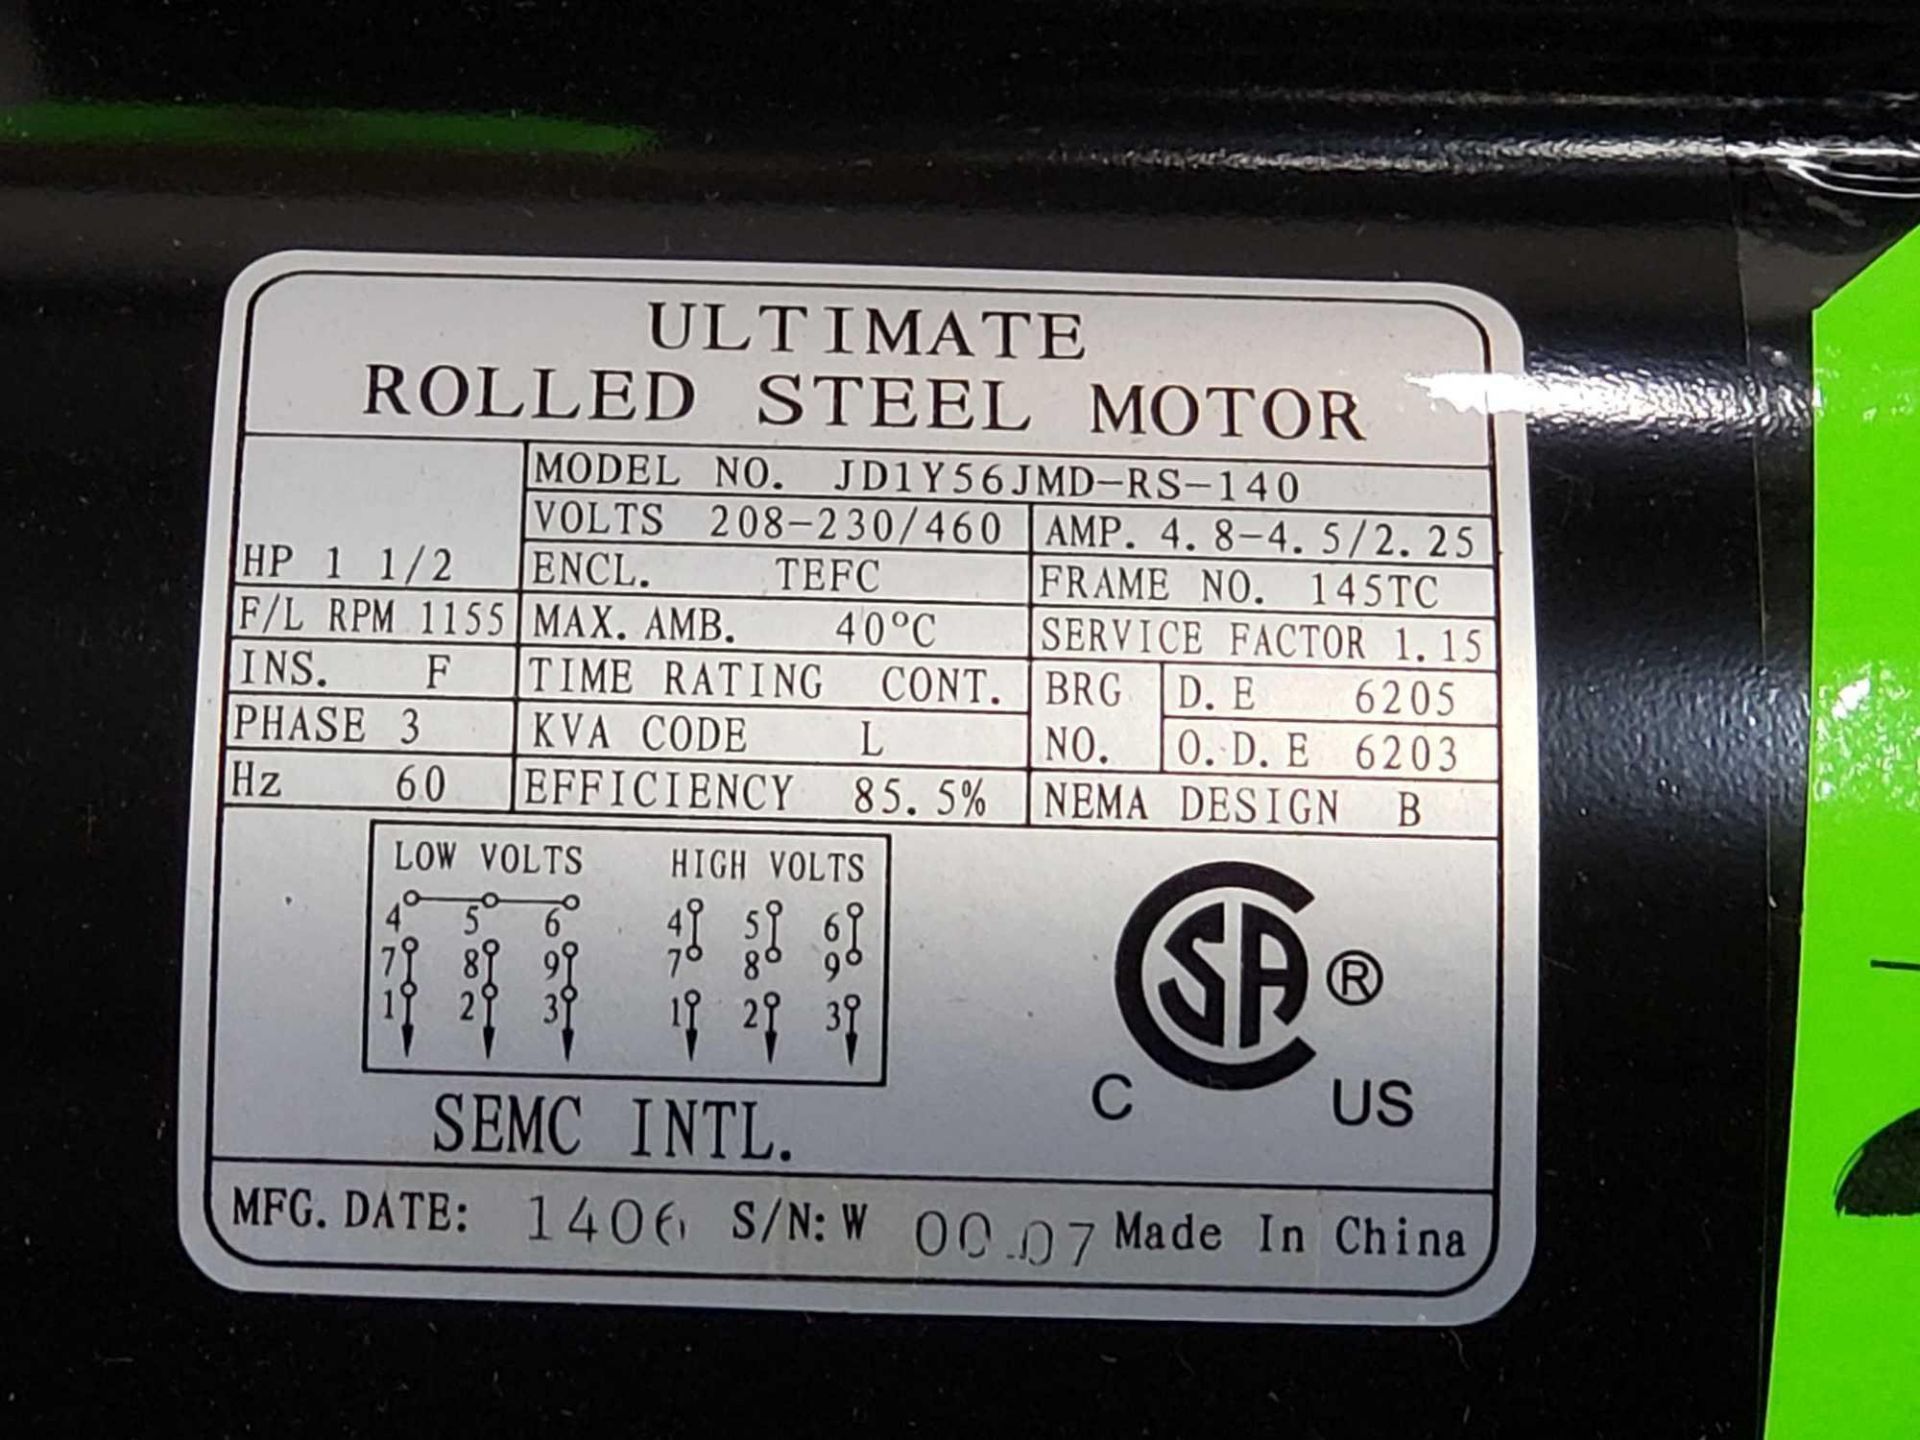 1 1/2hp Ultimate Rolled Steel Motor model JD1y56jmd-rs-140. 208-230/460V 3 phase, 1155rpm, 145TC. - Image 2 of 2